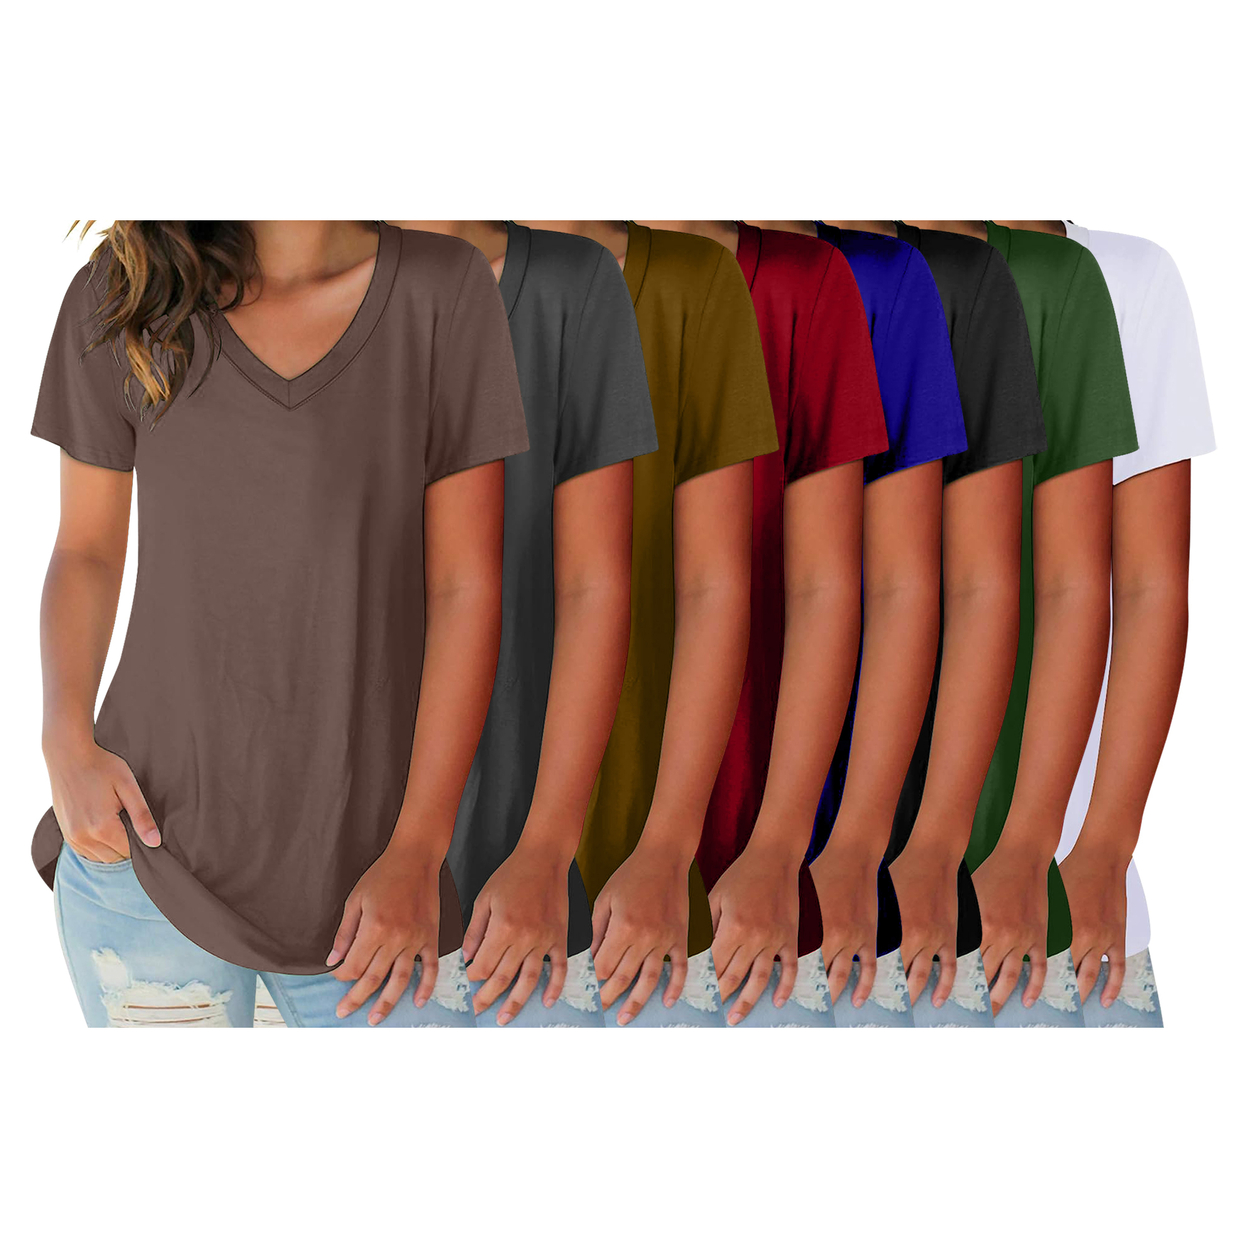 2-Pack: Women's Ultra Soft Smooth Cotton Blend Basic V-Neck Short Sleeve Shirts - Grey & Brown, Large